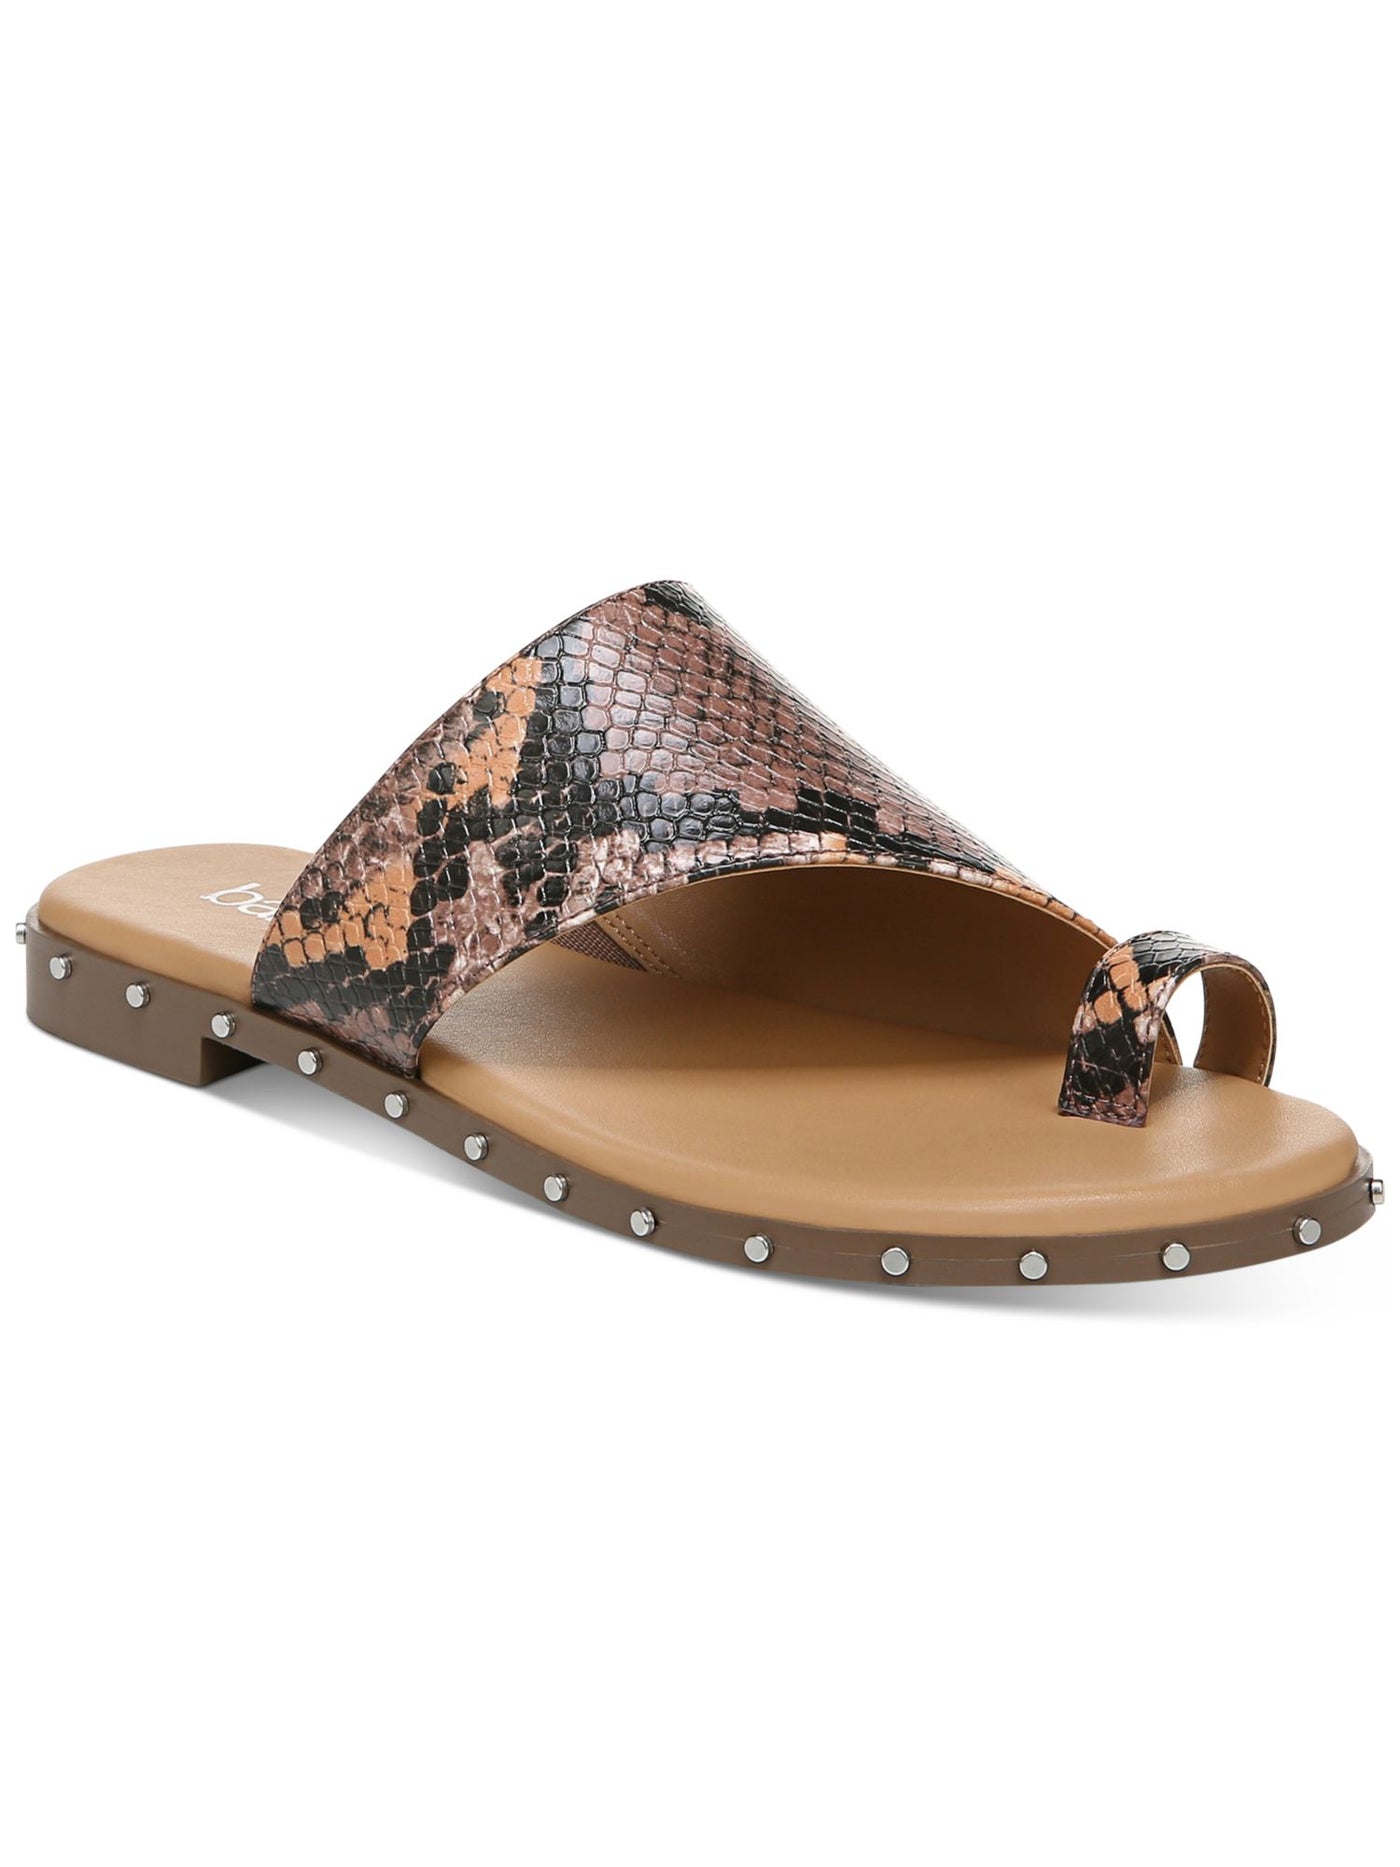 BAR III Womens Beige Snake Toe Loop Asymmetrical Studded Hattie Round Toe Slip On Slide Sandals Shoes 7.5 M